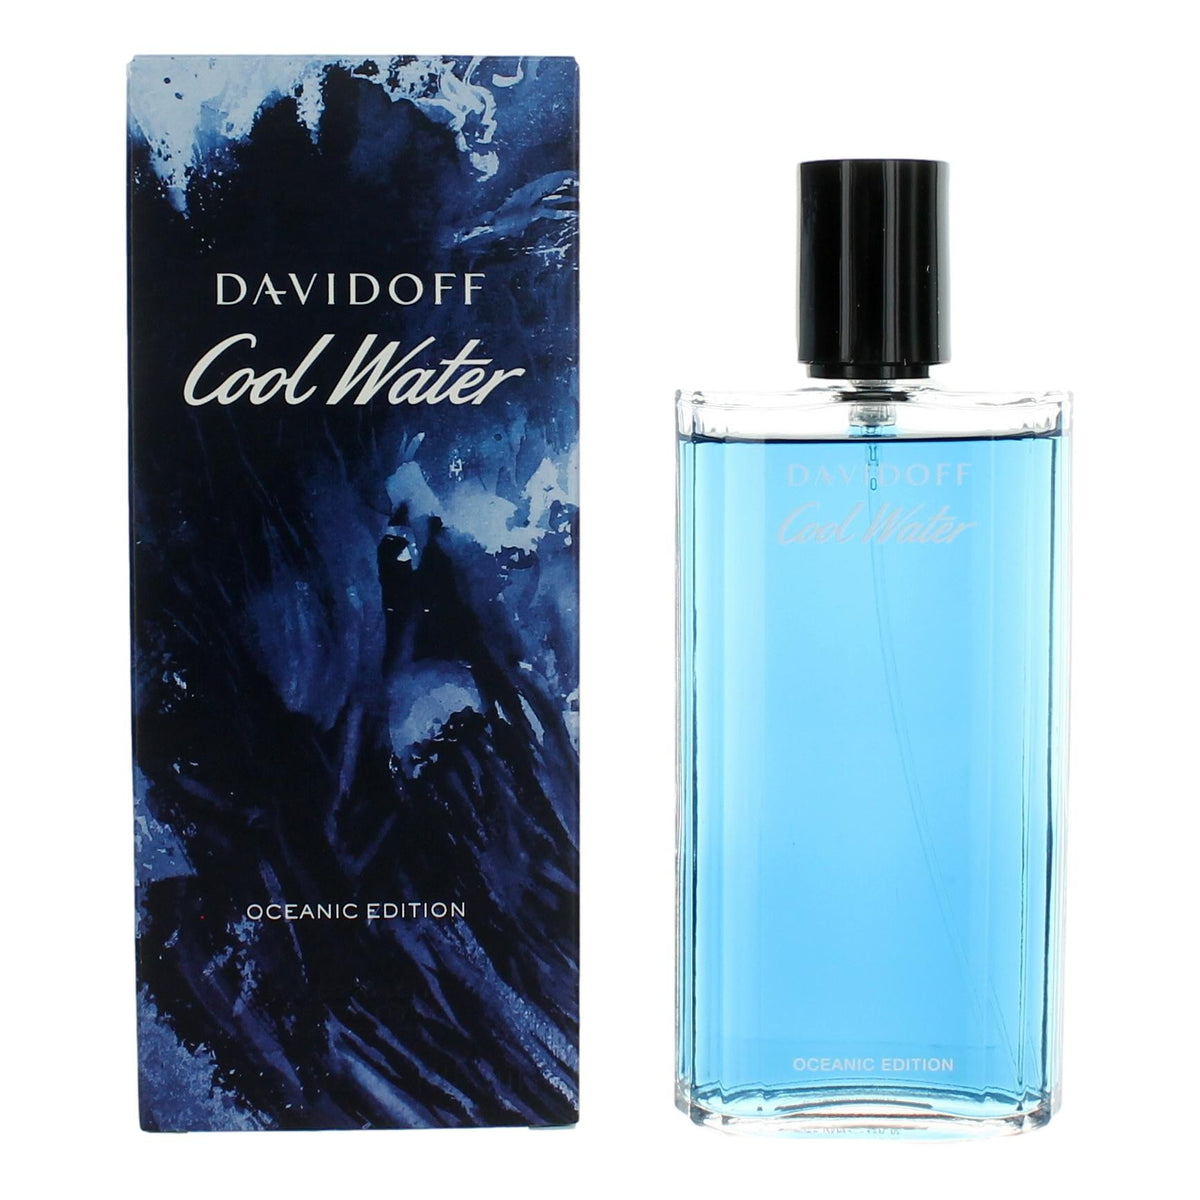 Cool Water Oceanic Edition by Davidoff, 4.2 oz Eau de Toilette Spray for Men